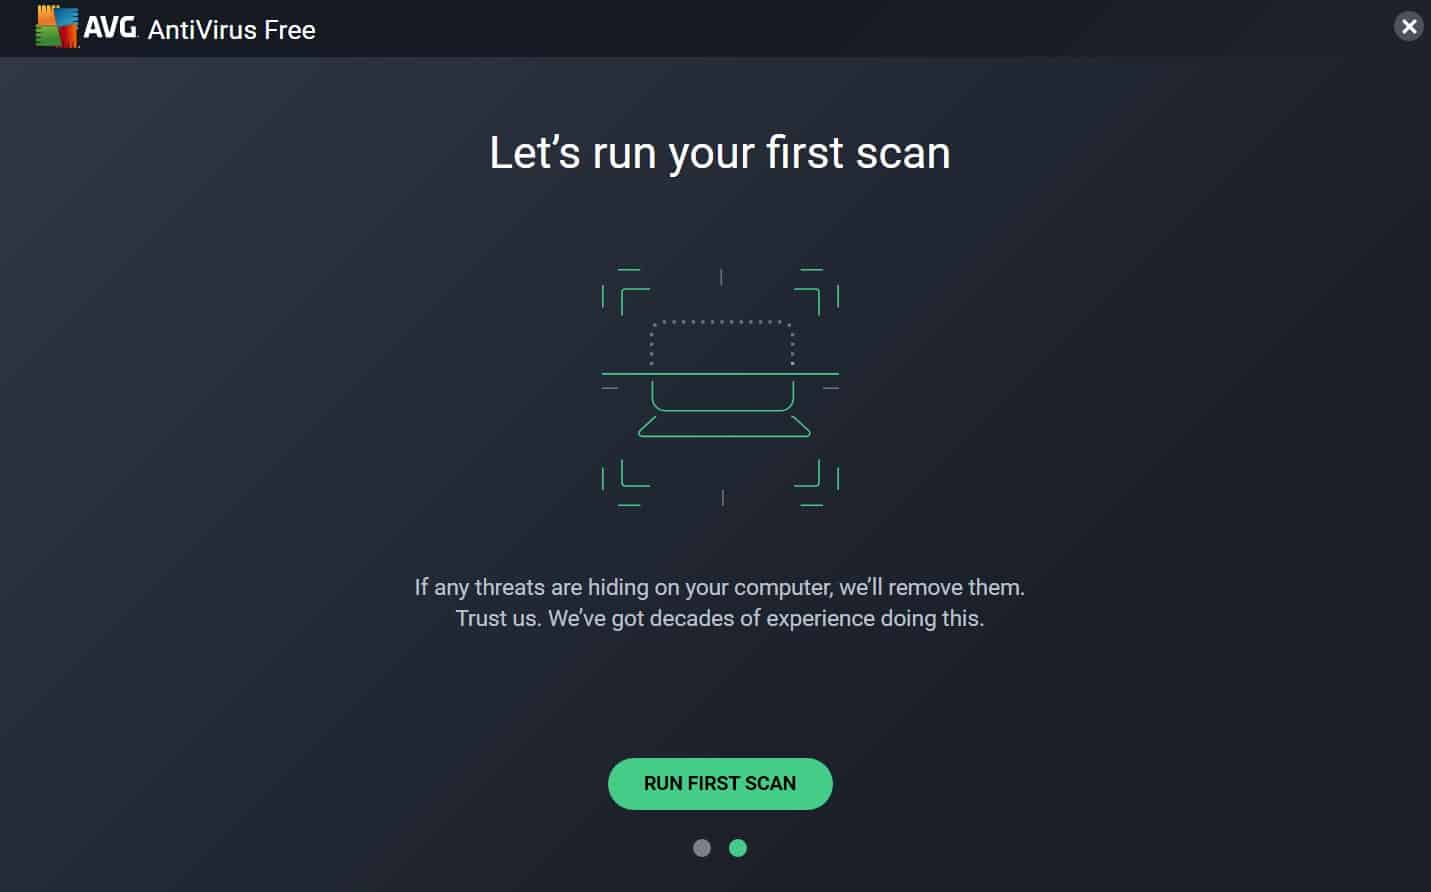 Perform a virus scan
Open your antivirus software